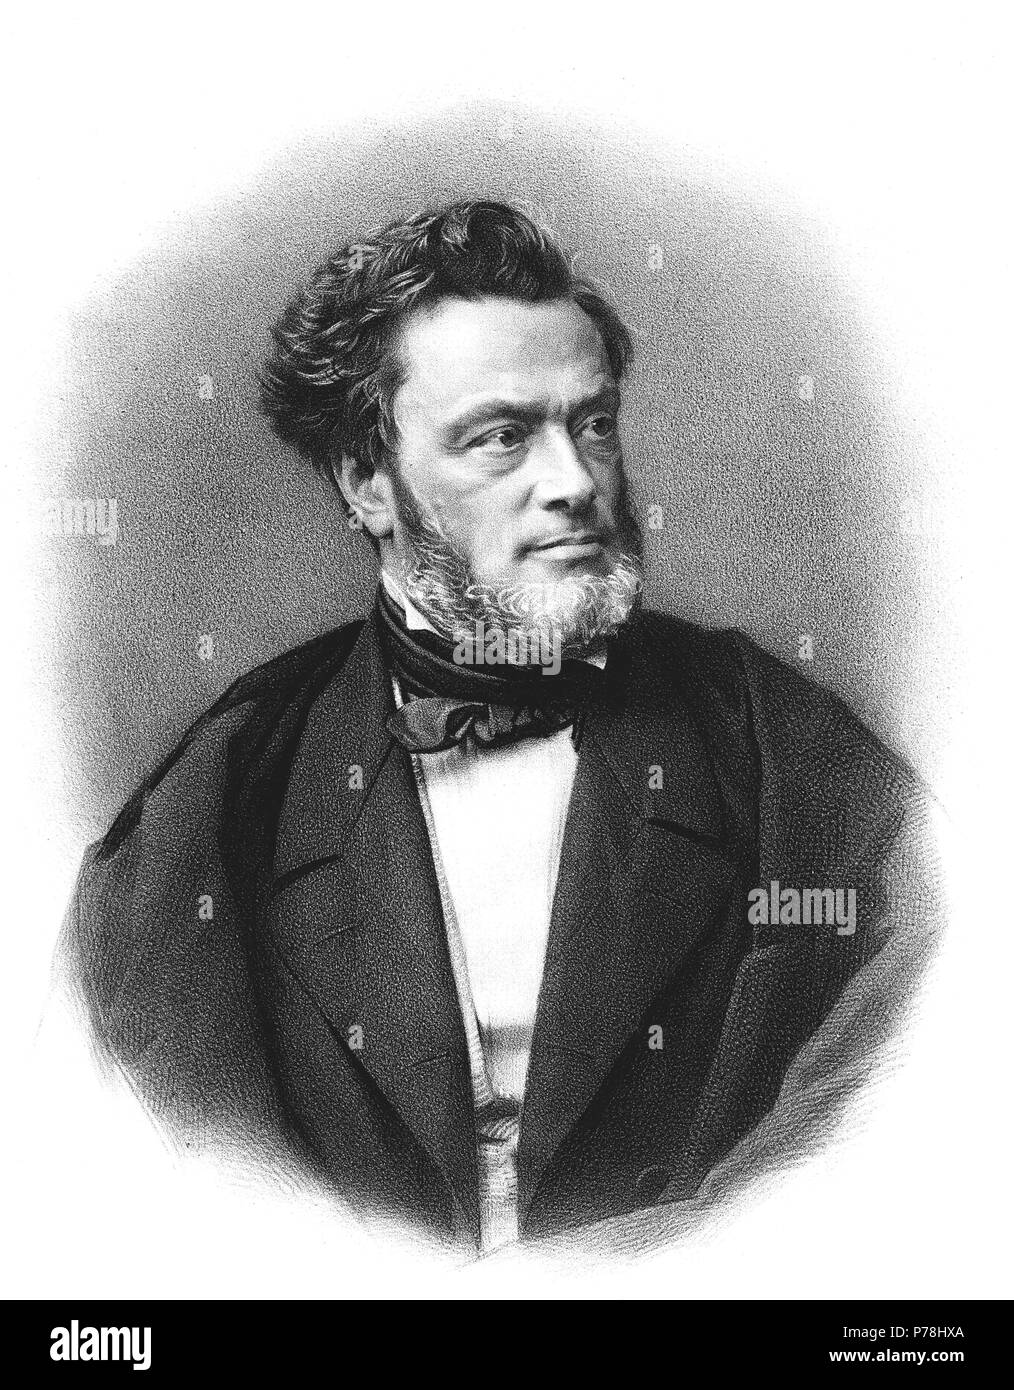 Favre, Jules (1809-1880), político francés. Grabado de 1865. Stock Photo